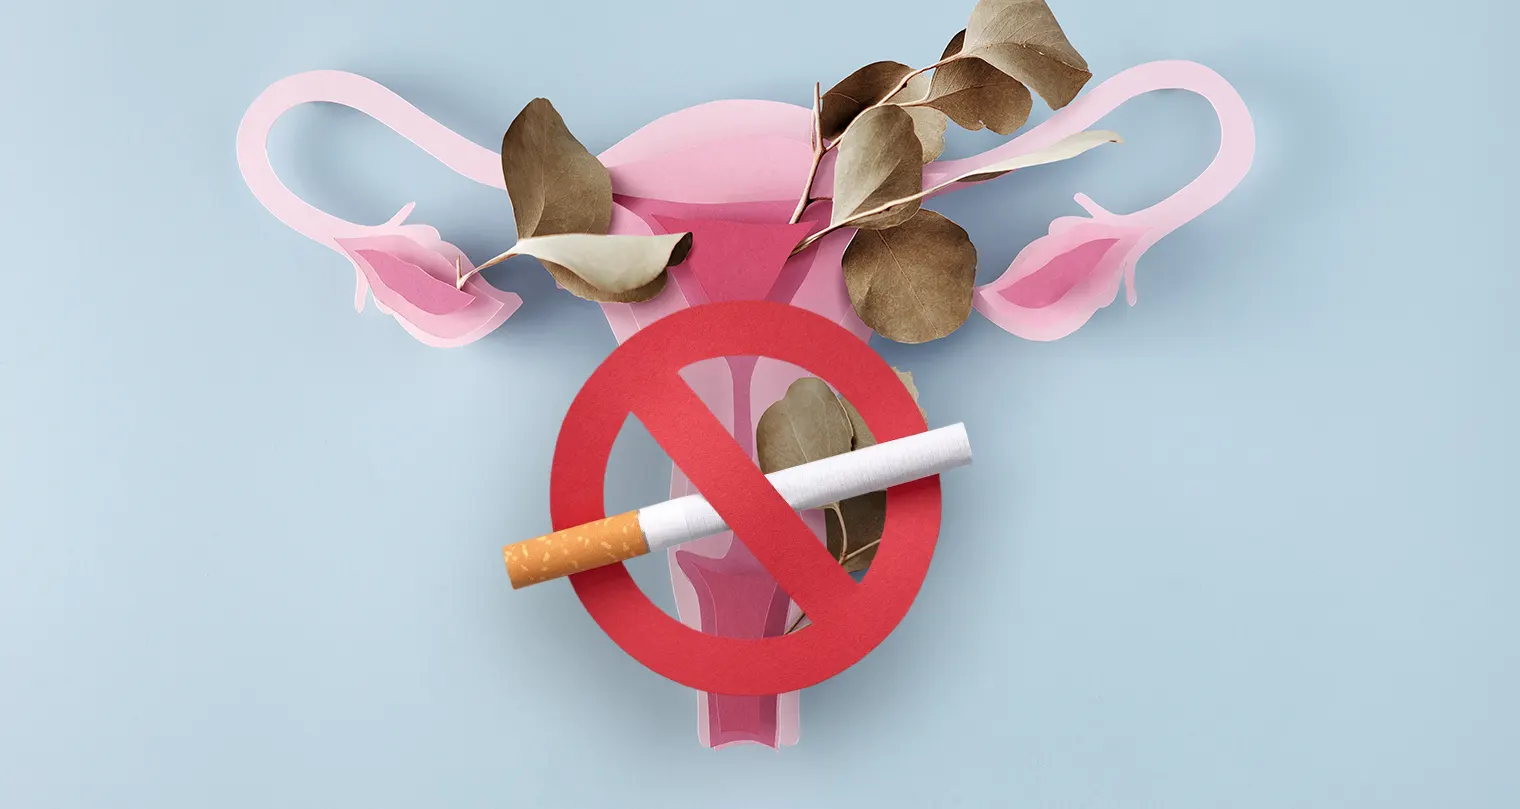 Merokok dapat Menyebabkan Kanker Serviks. Segera Berhenti!